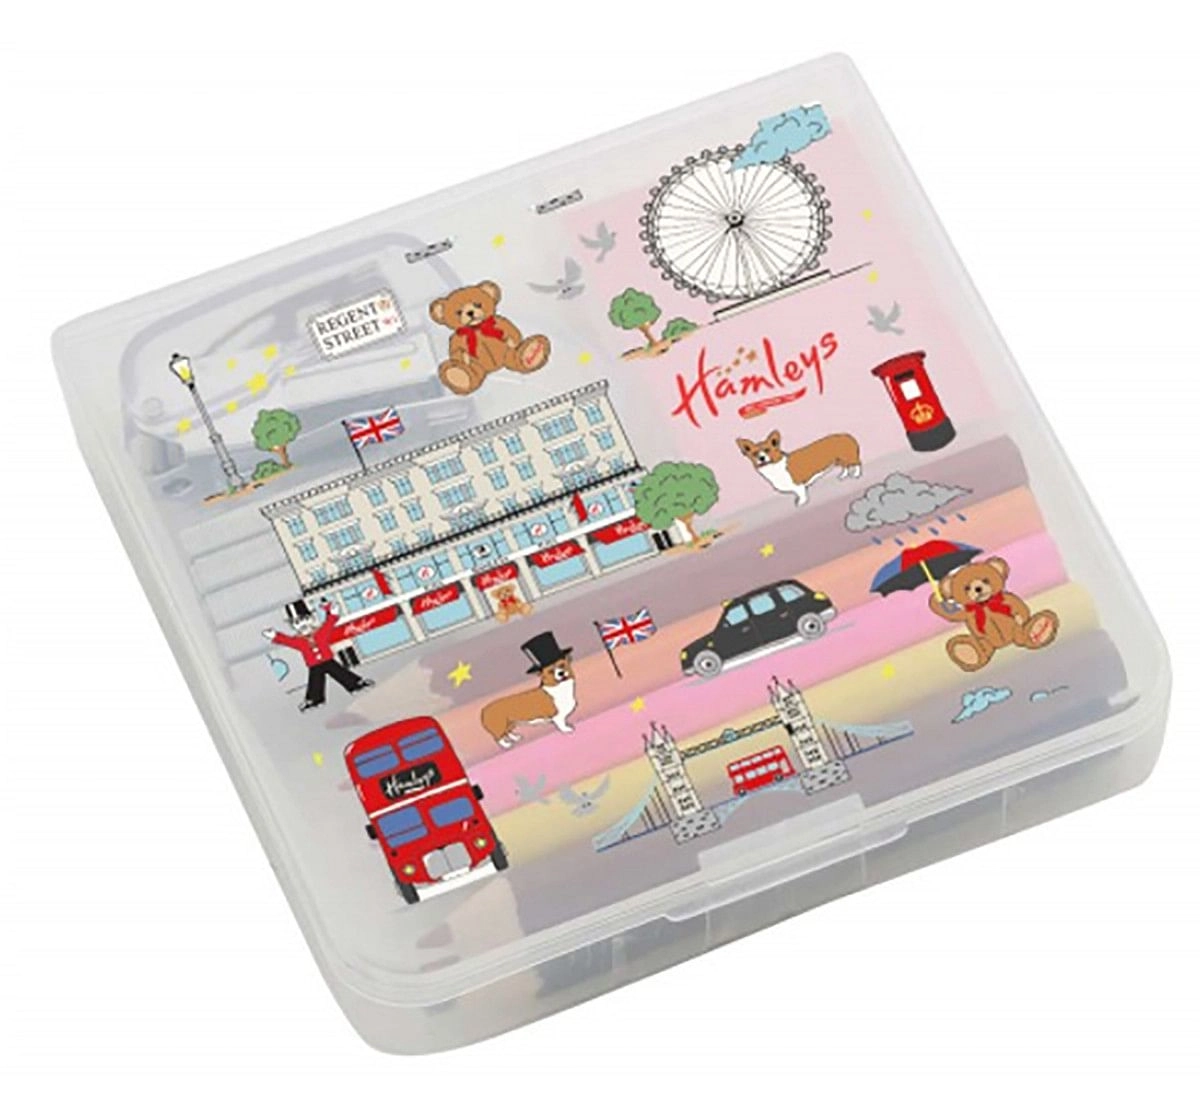 Hamelys Mini Stationery Kit  School Stationery for Kids age 3Y+ 